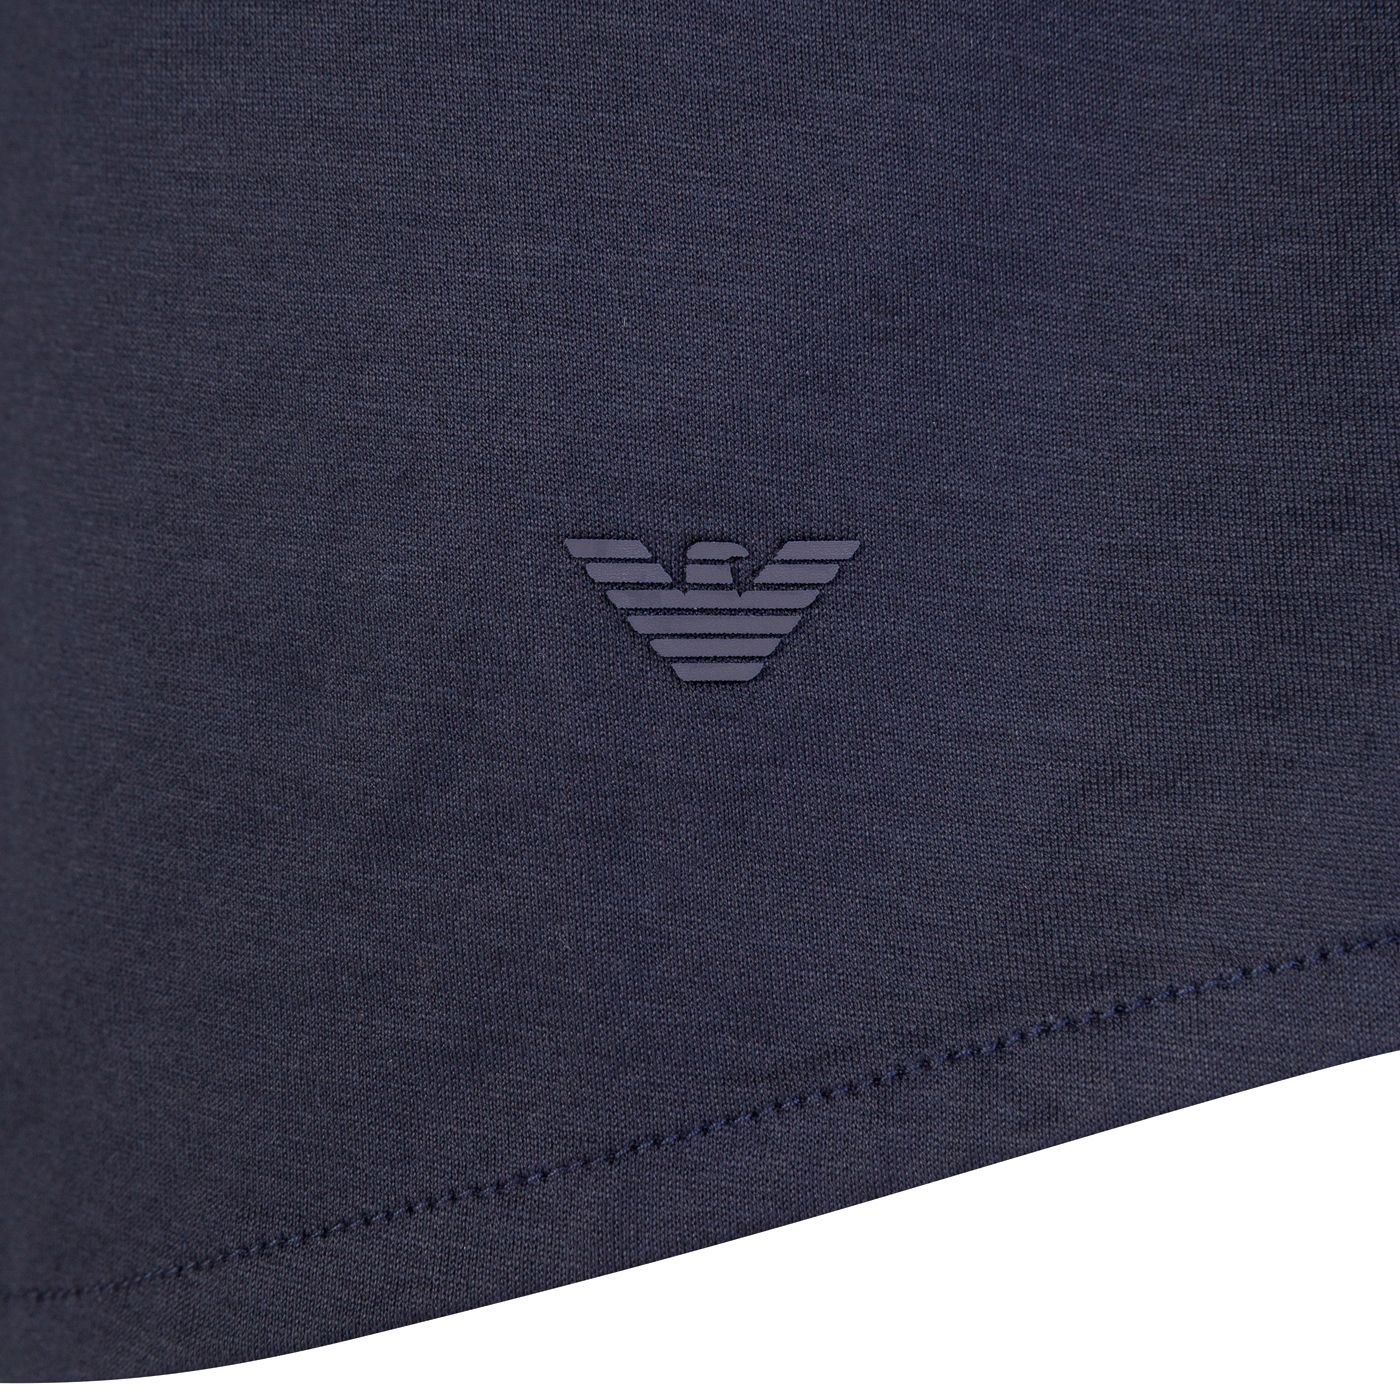 Emporio Armani 8N1CG0 Tencel Jersey Blend Shirt - 920 Navy - Escape Menswear